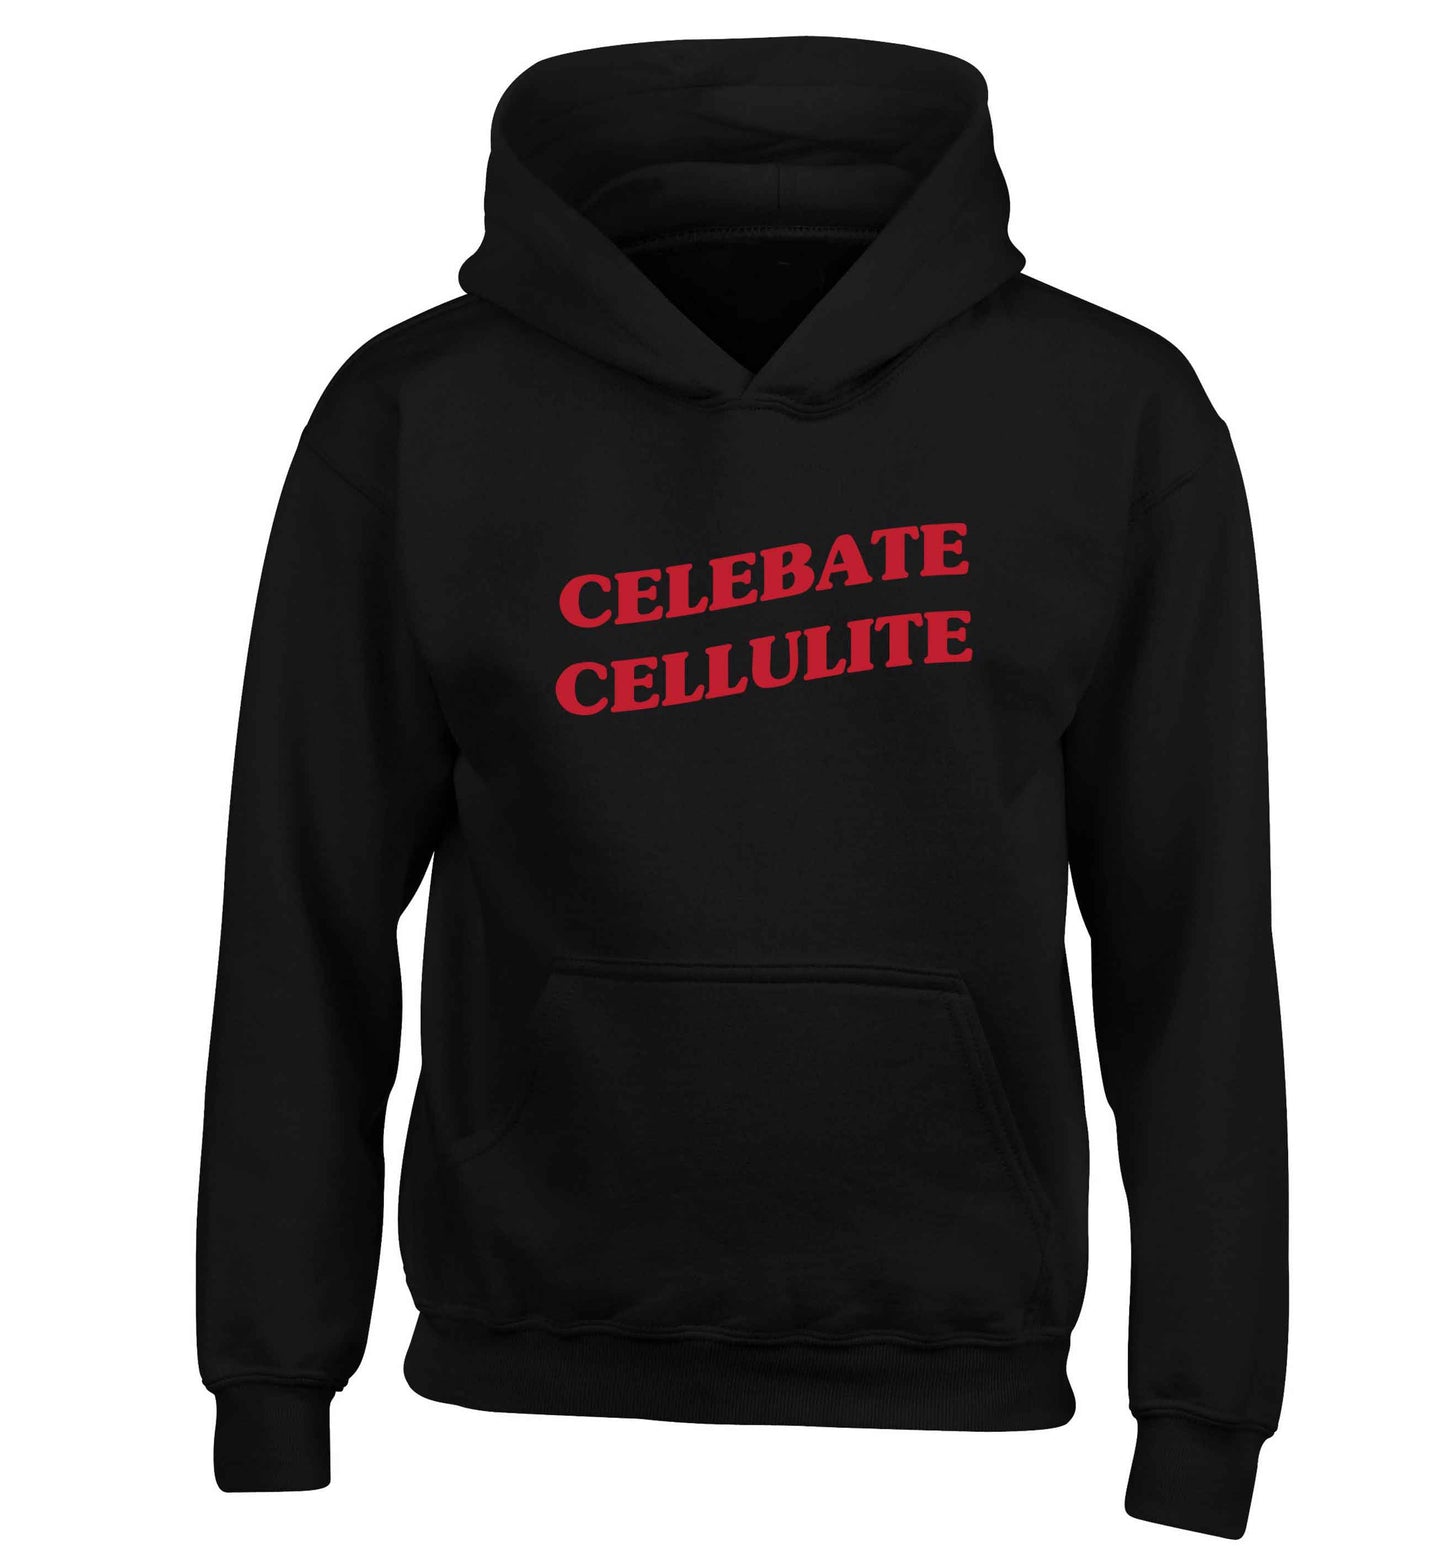 Celebrate cellulite children's black hoodie 12-13 Years